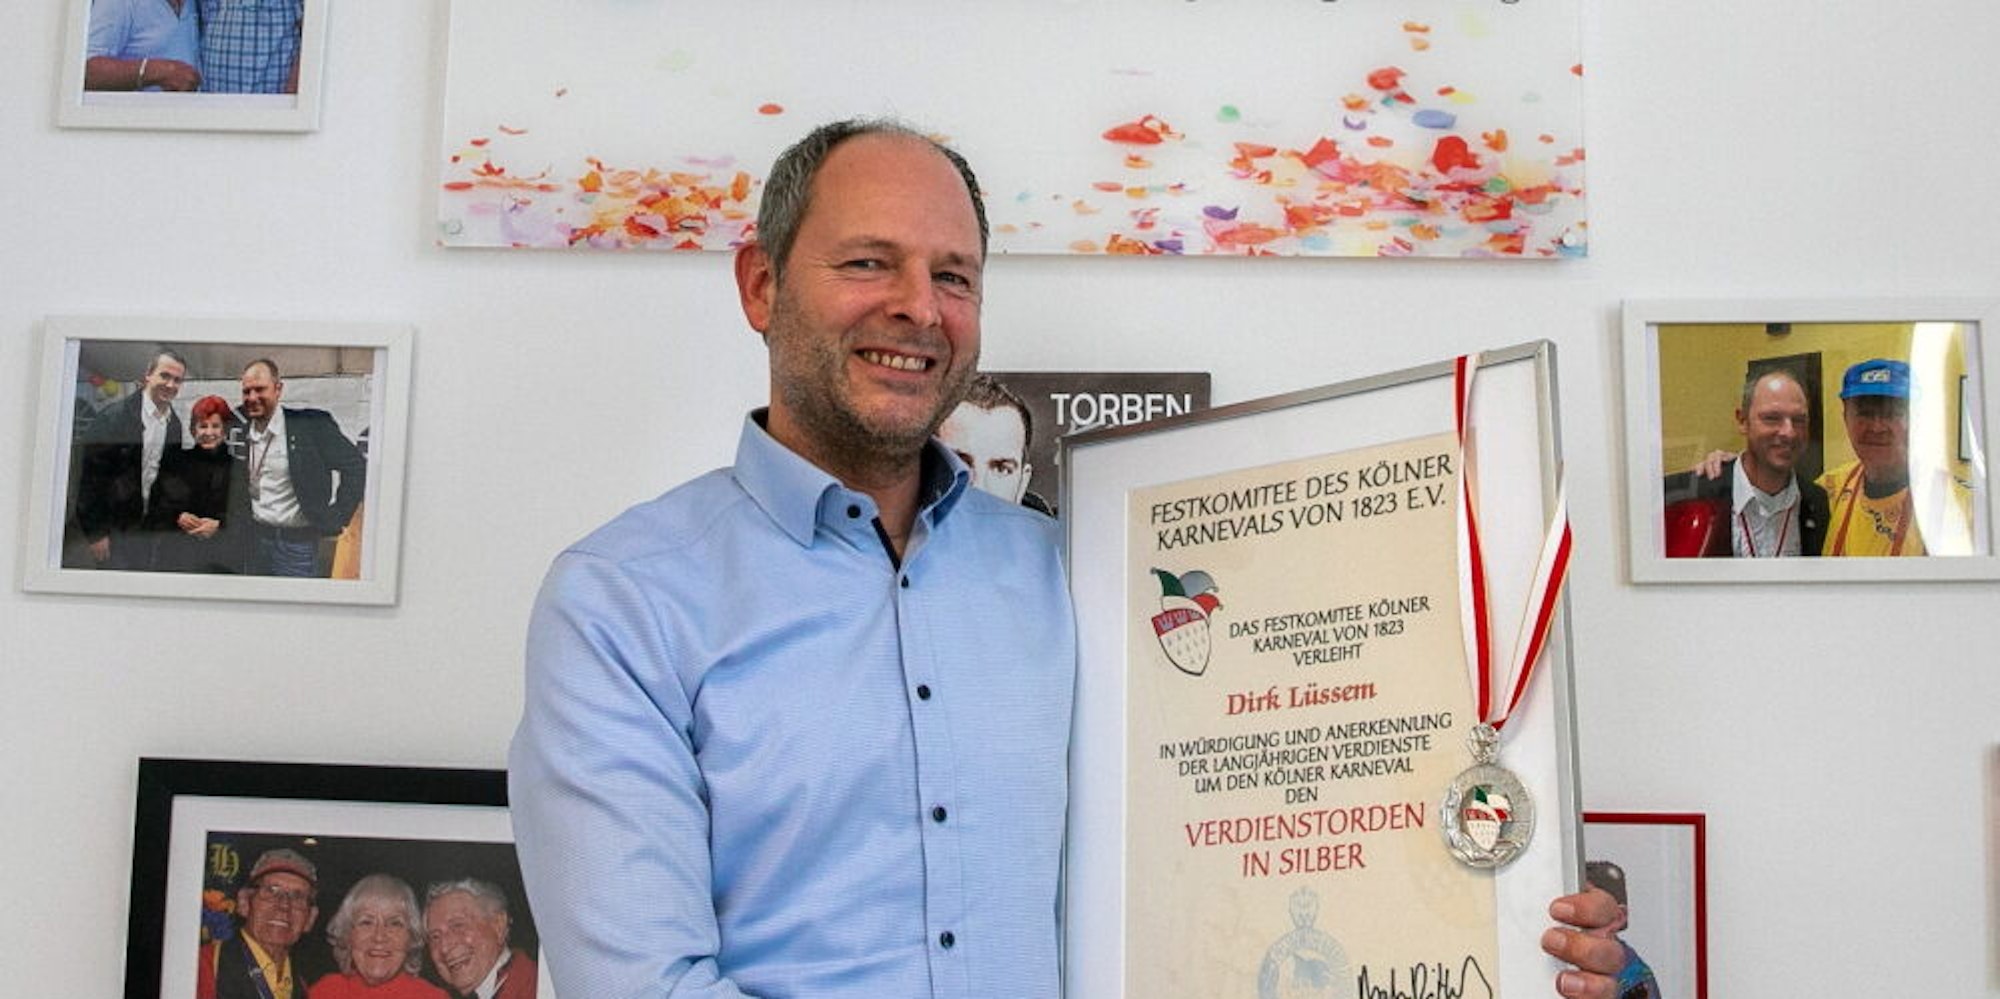 Besonders stolz ist Dirk Lüssem auf den Verdienstorden in Silber des Festkomitees Kölner Karneval plus Urkunde.